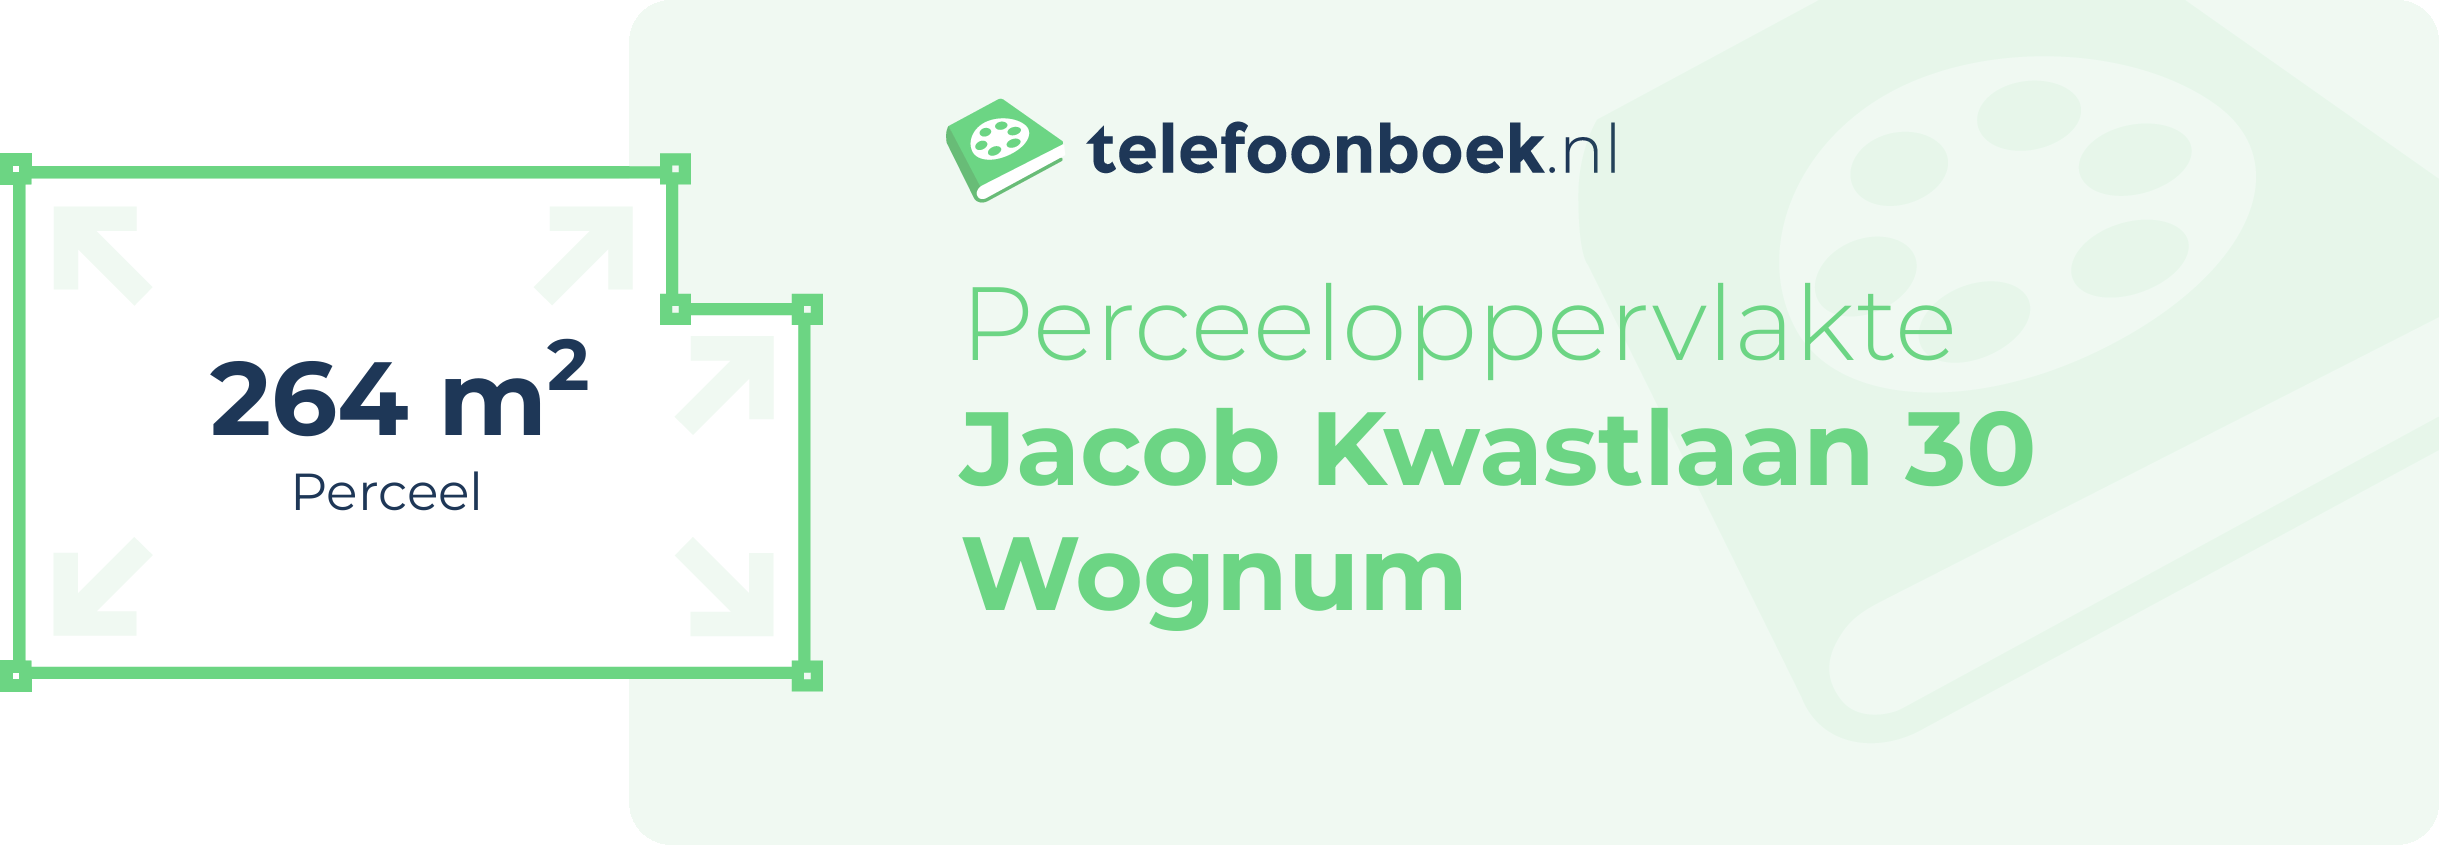 Perceeloppervlakte Jacob Kwastlaan 30 Wognum